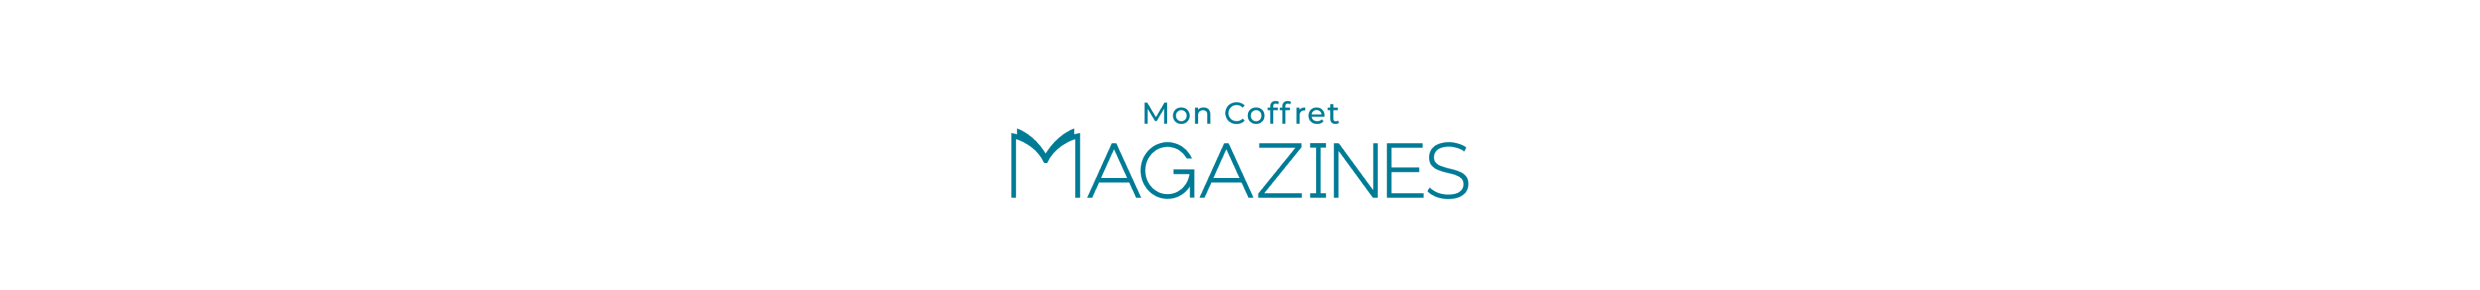 MON COFFRET MAGAZINES logo